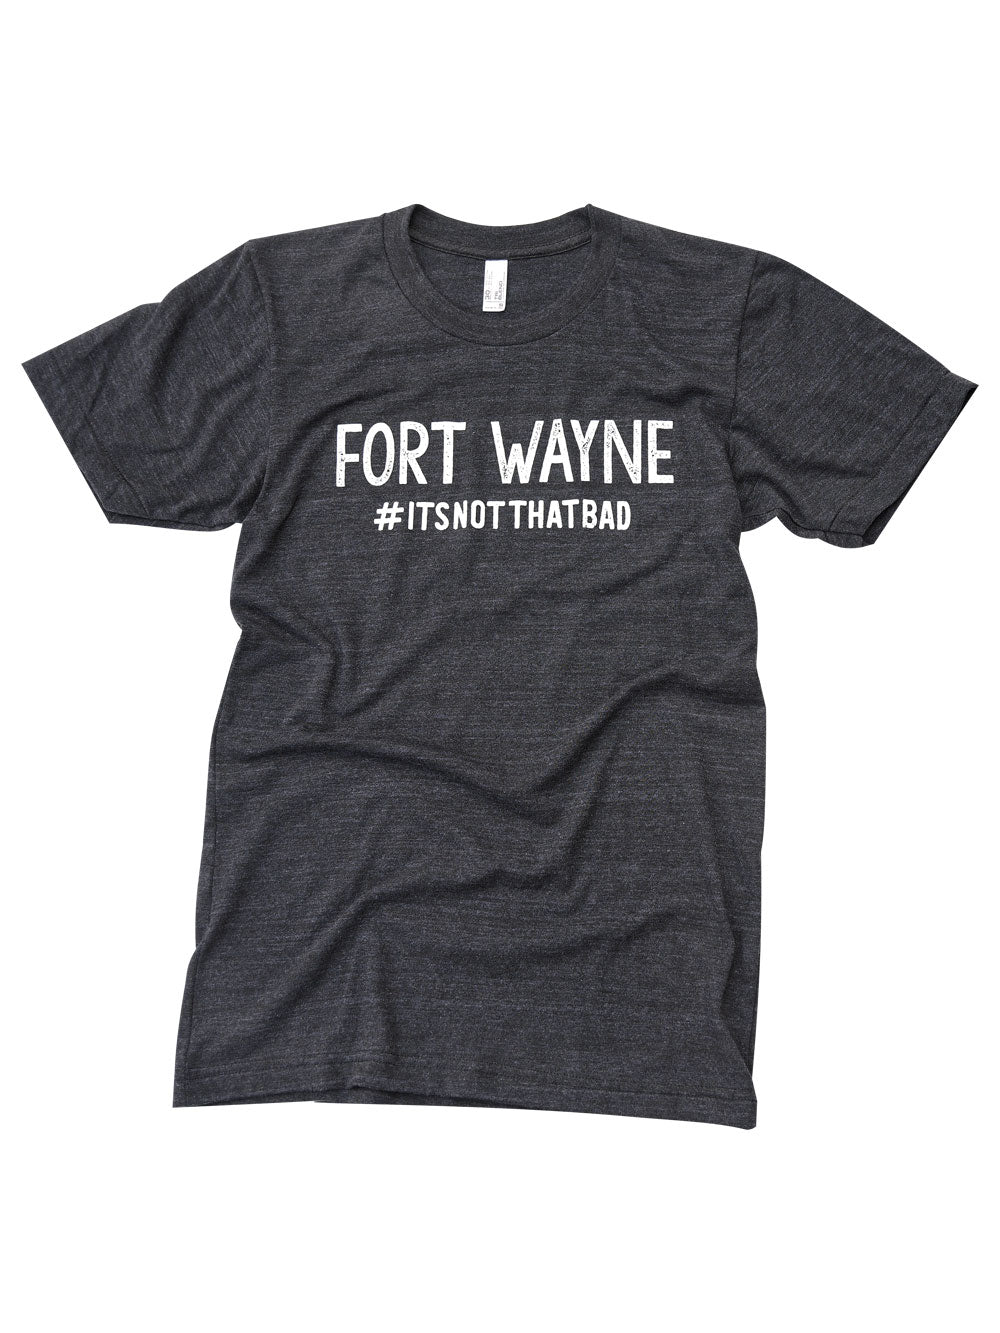 Fort Wayne #ItsNotThatBad